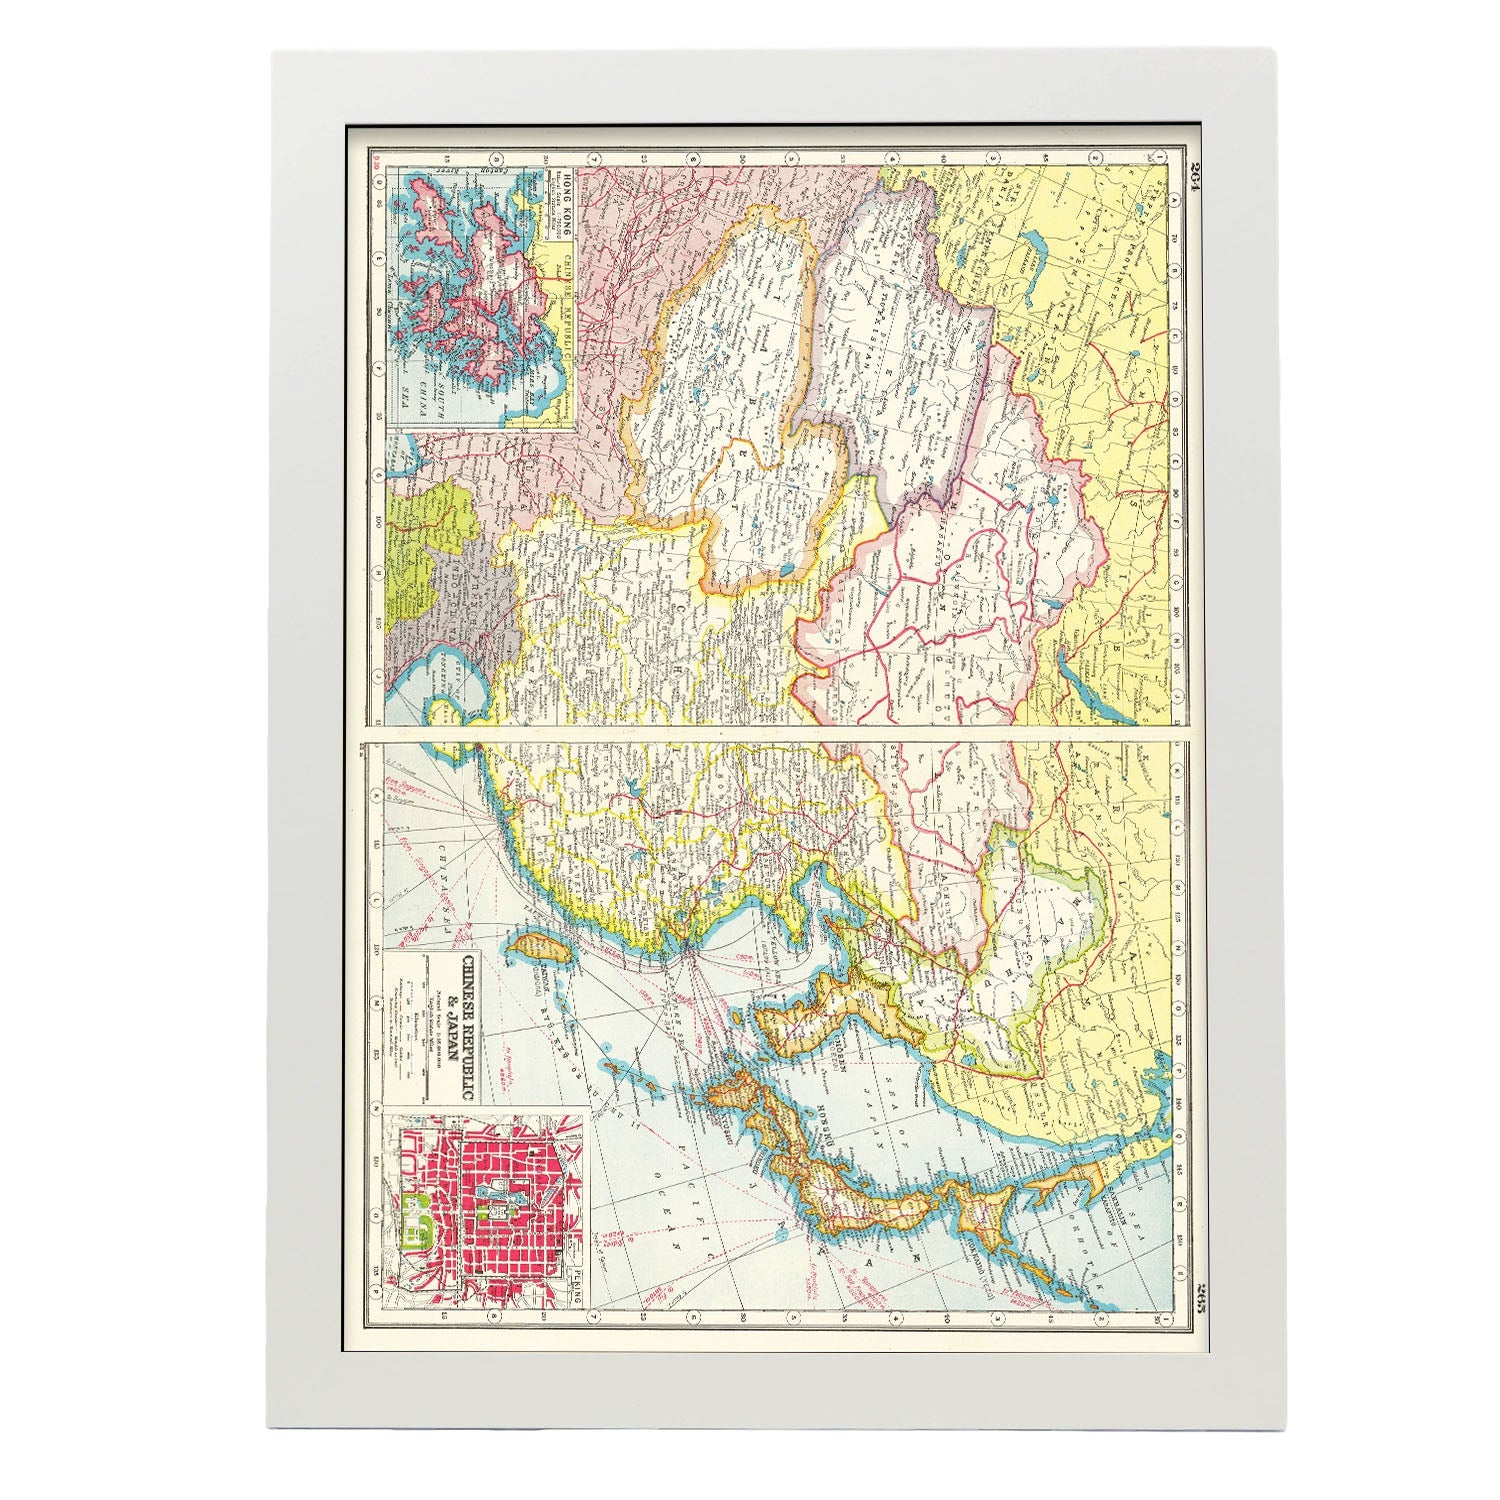 1920 map of the Chinese Republic Japan 2-Artwork-Nacnic-A3-Marco Blanco-Nacnic Estudio SL